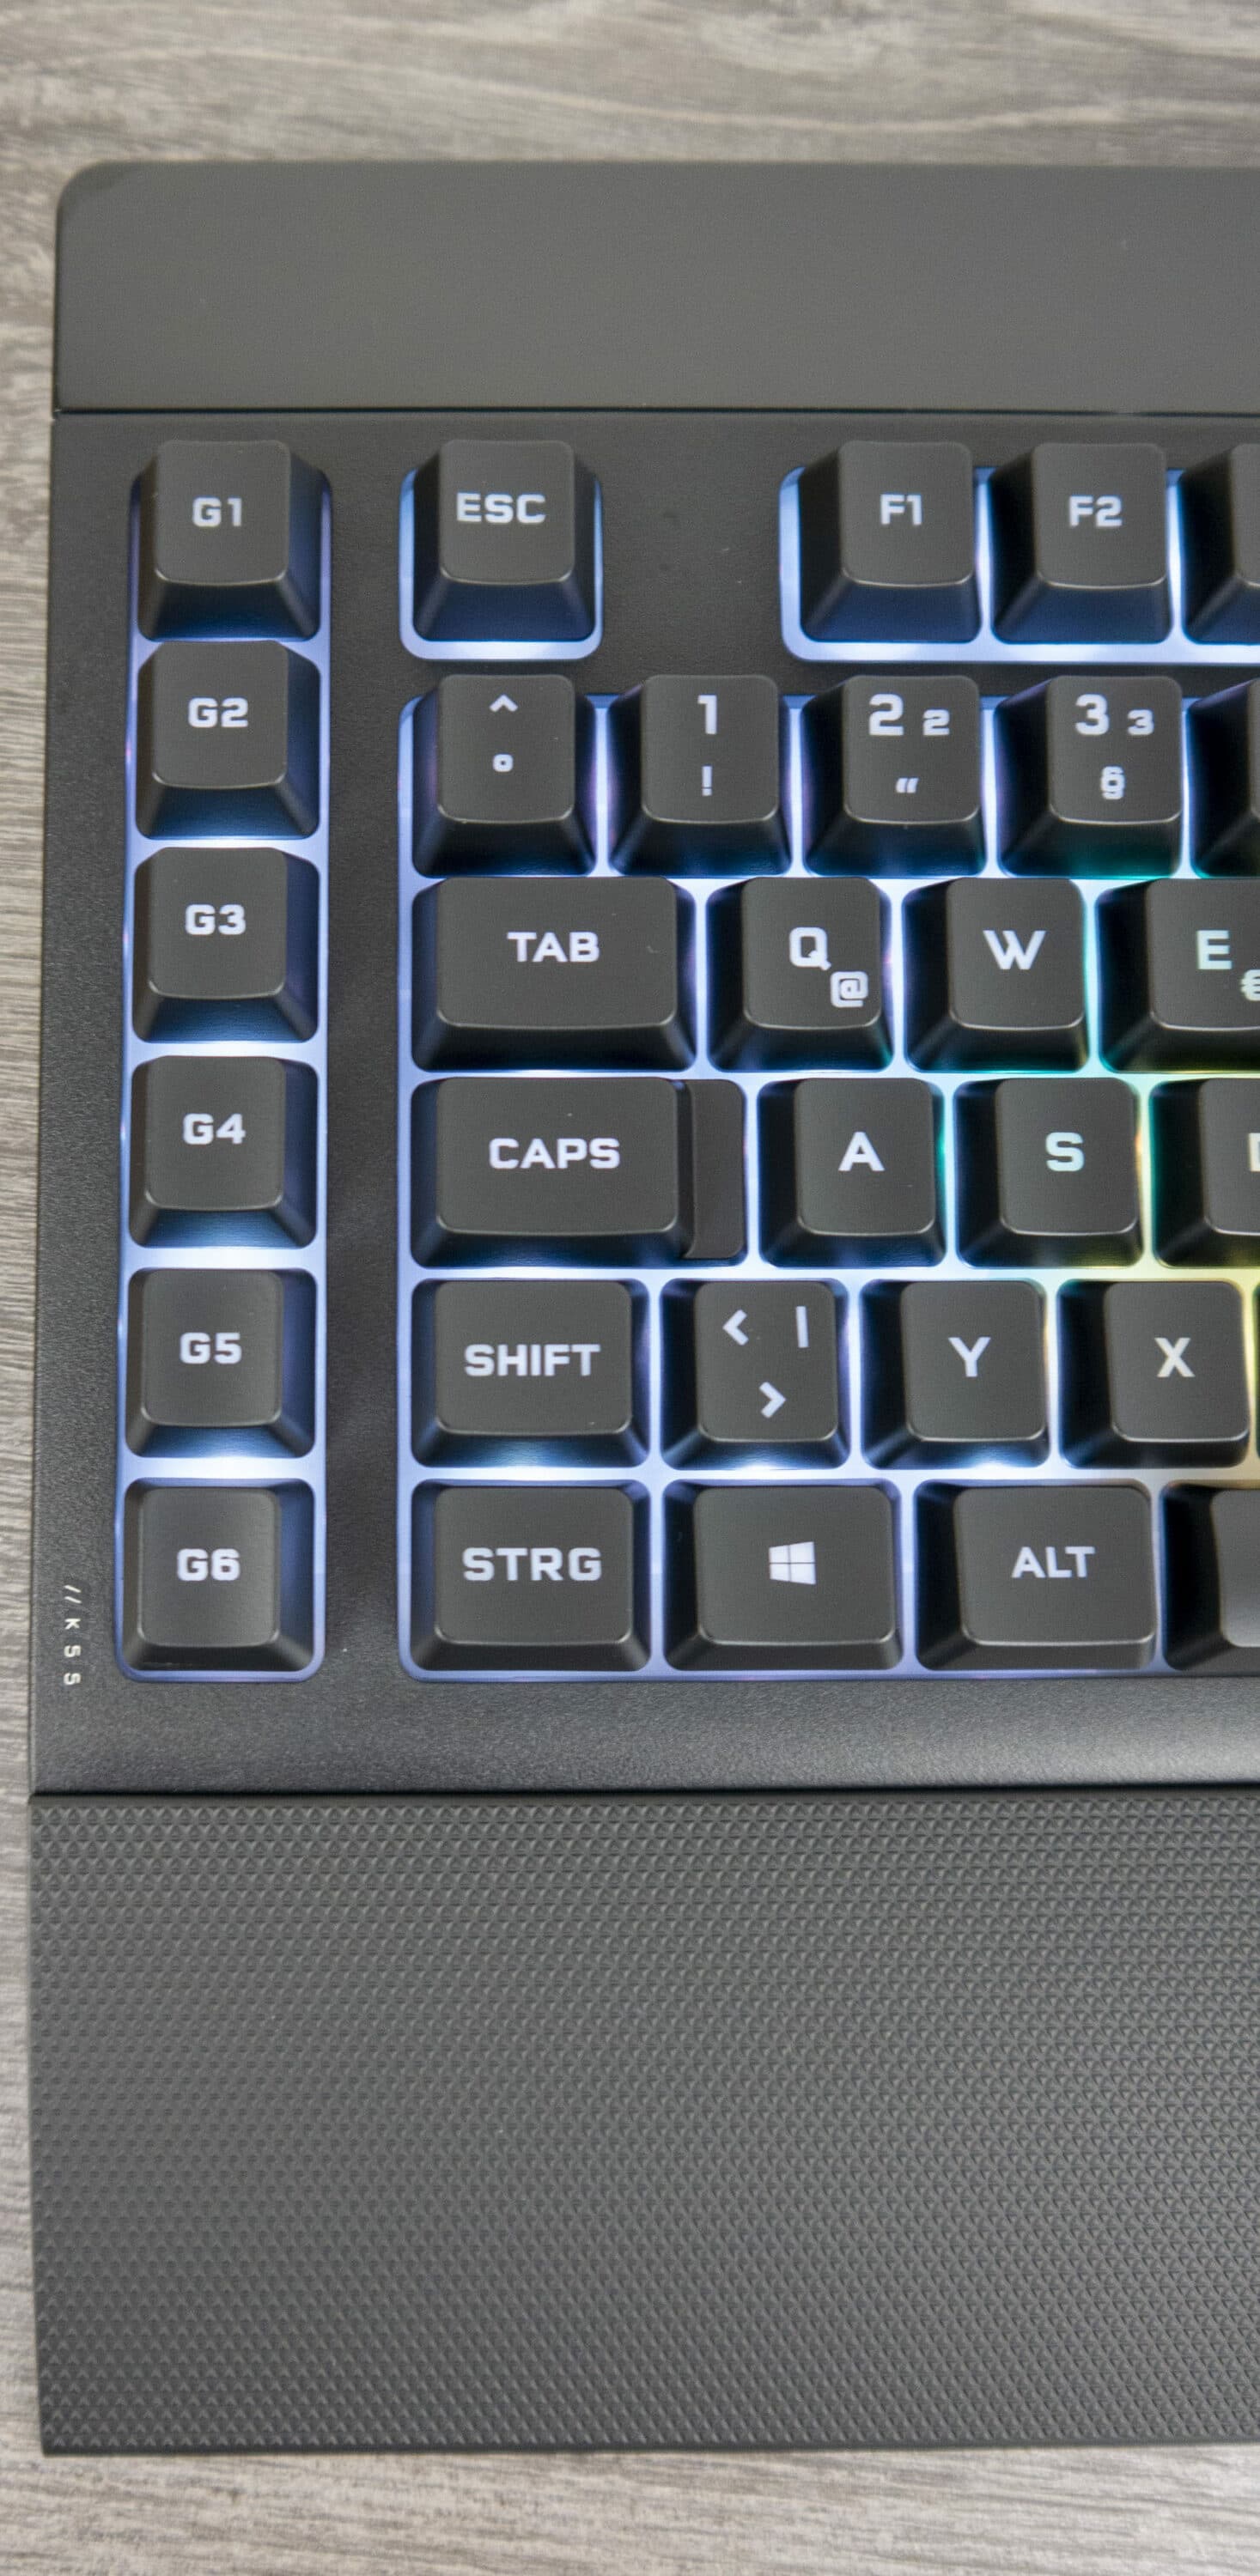 corsair k55 keyboard macro buttons not working